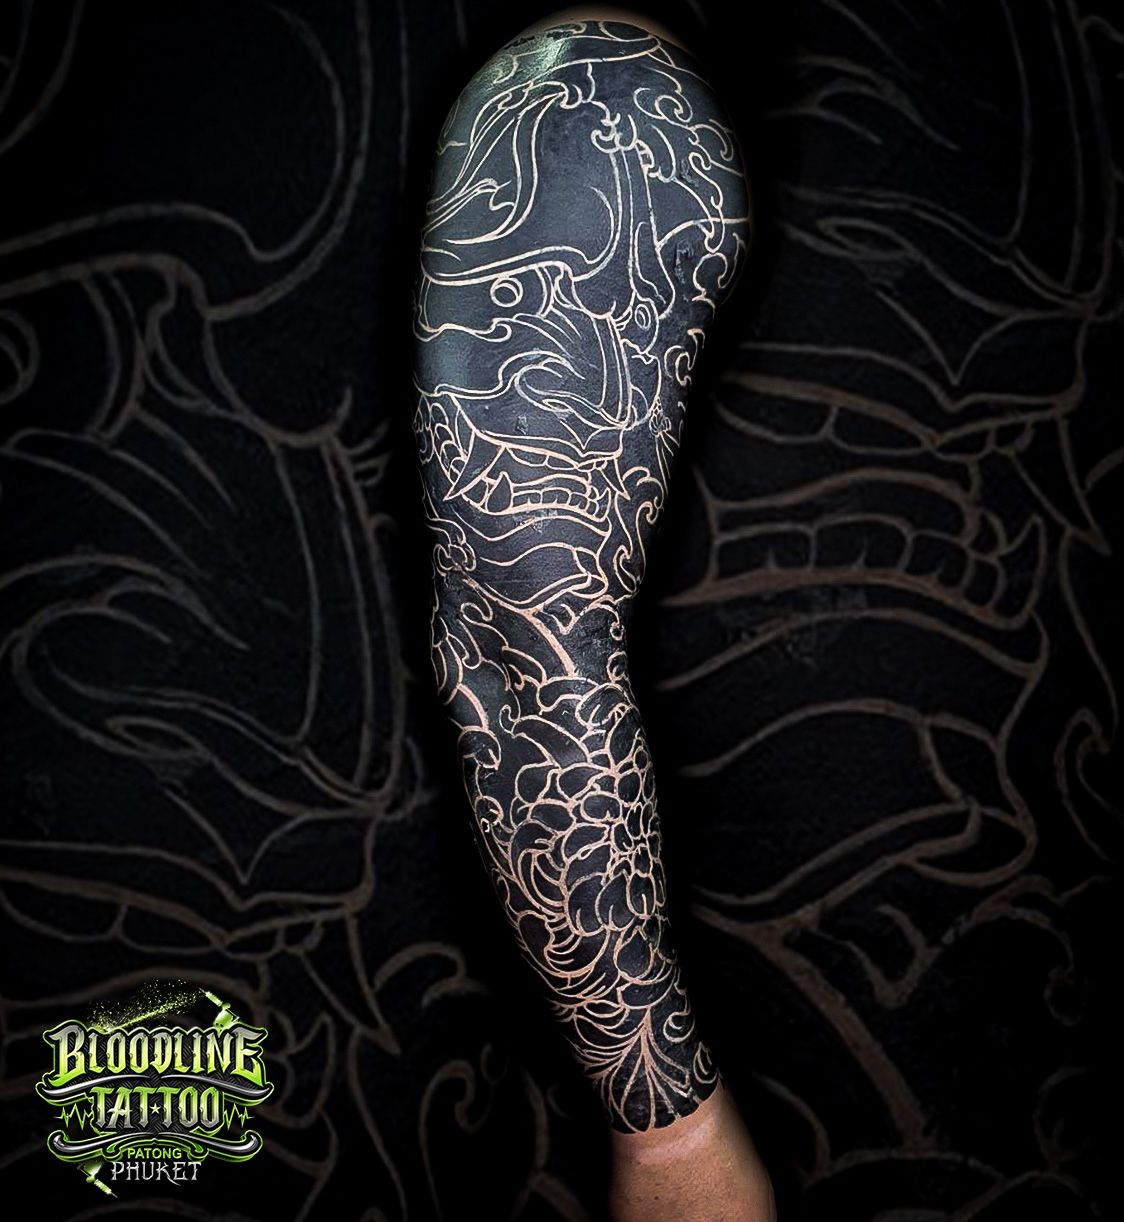 Arm blackout first session Lauren Locomotive tattoo Inverness FL  r tattoos